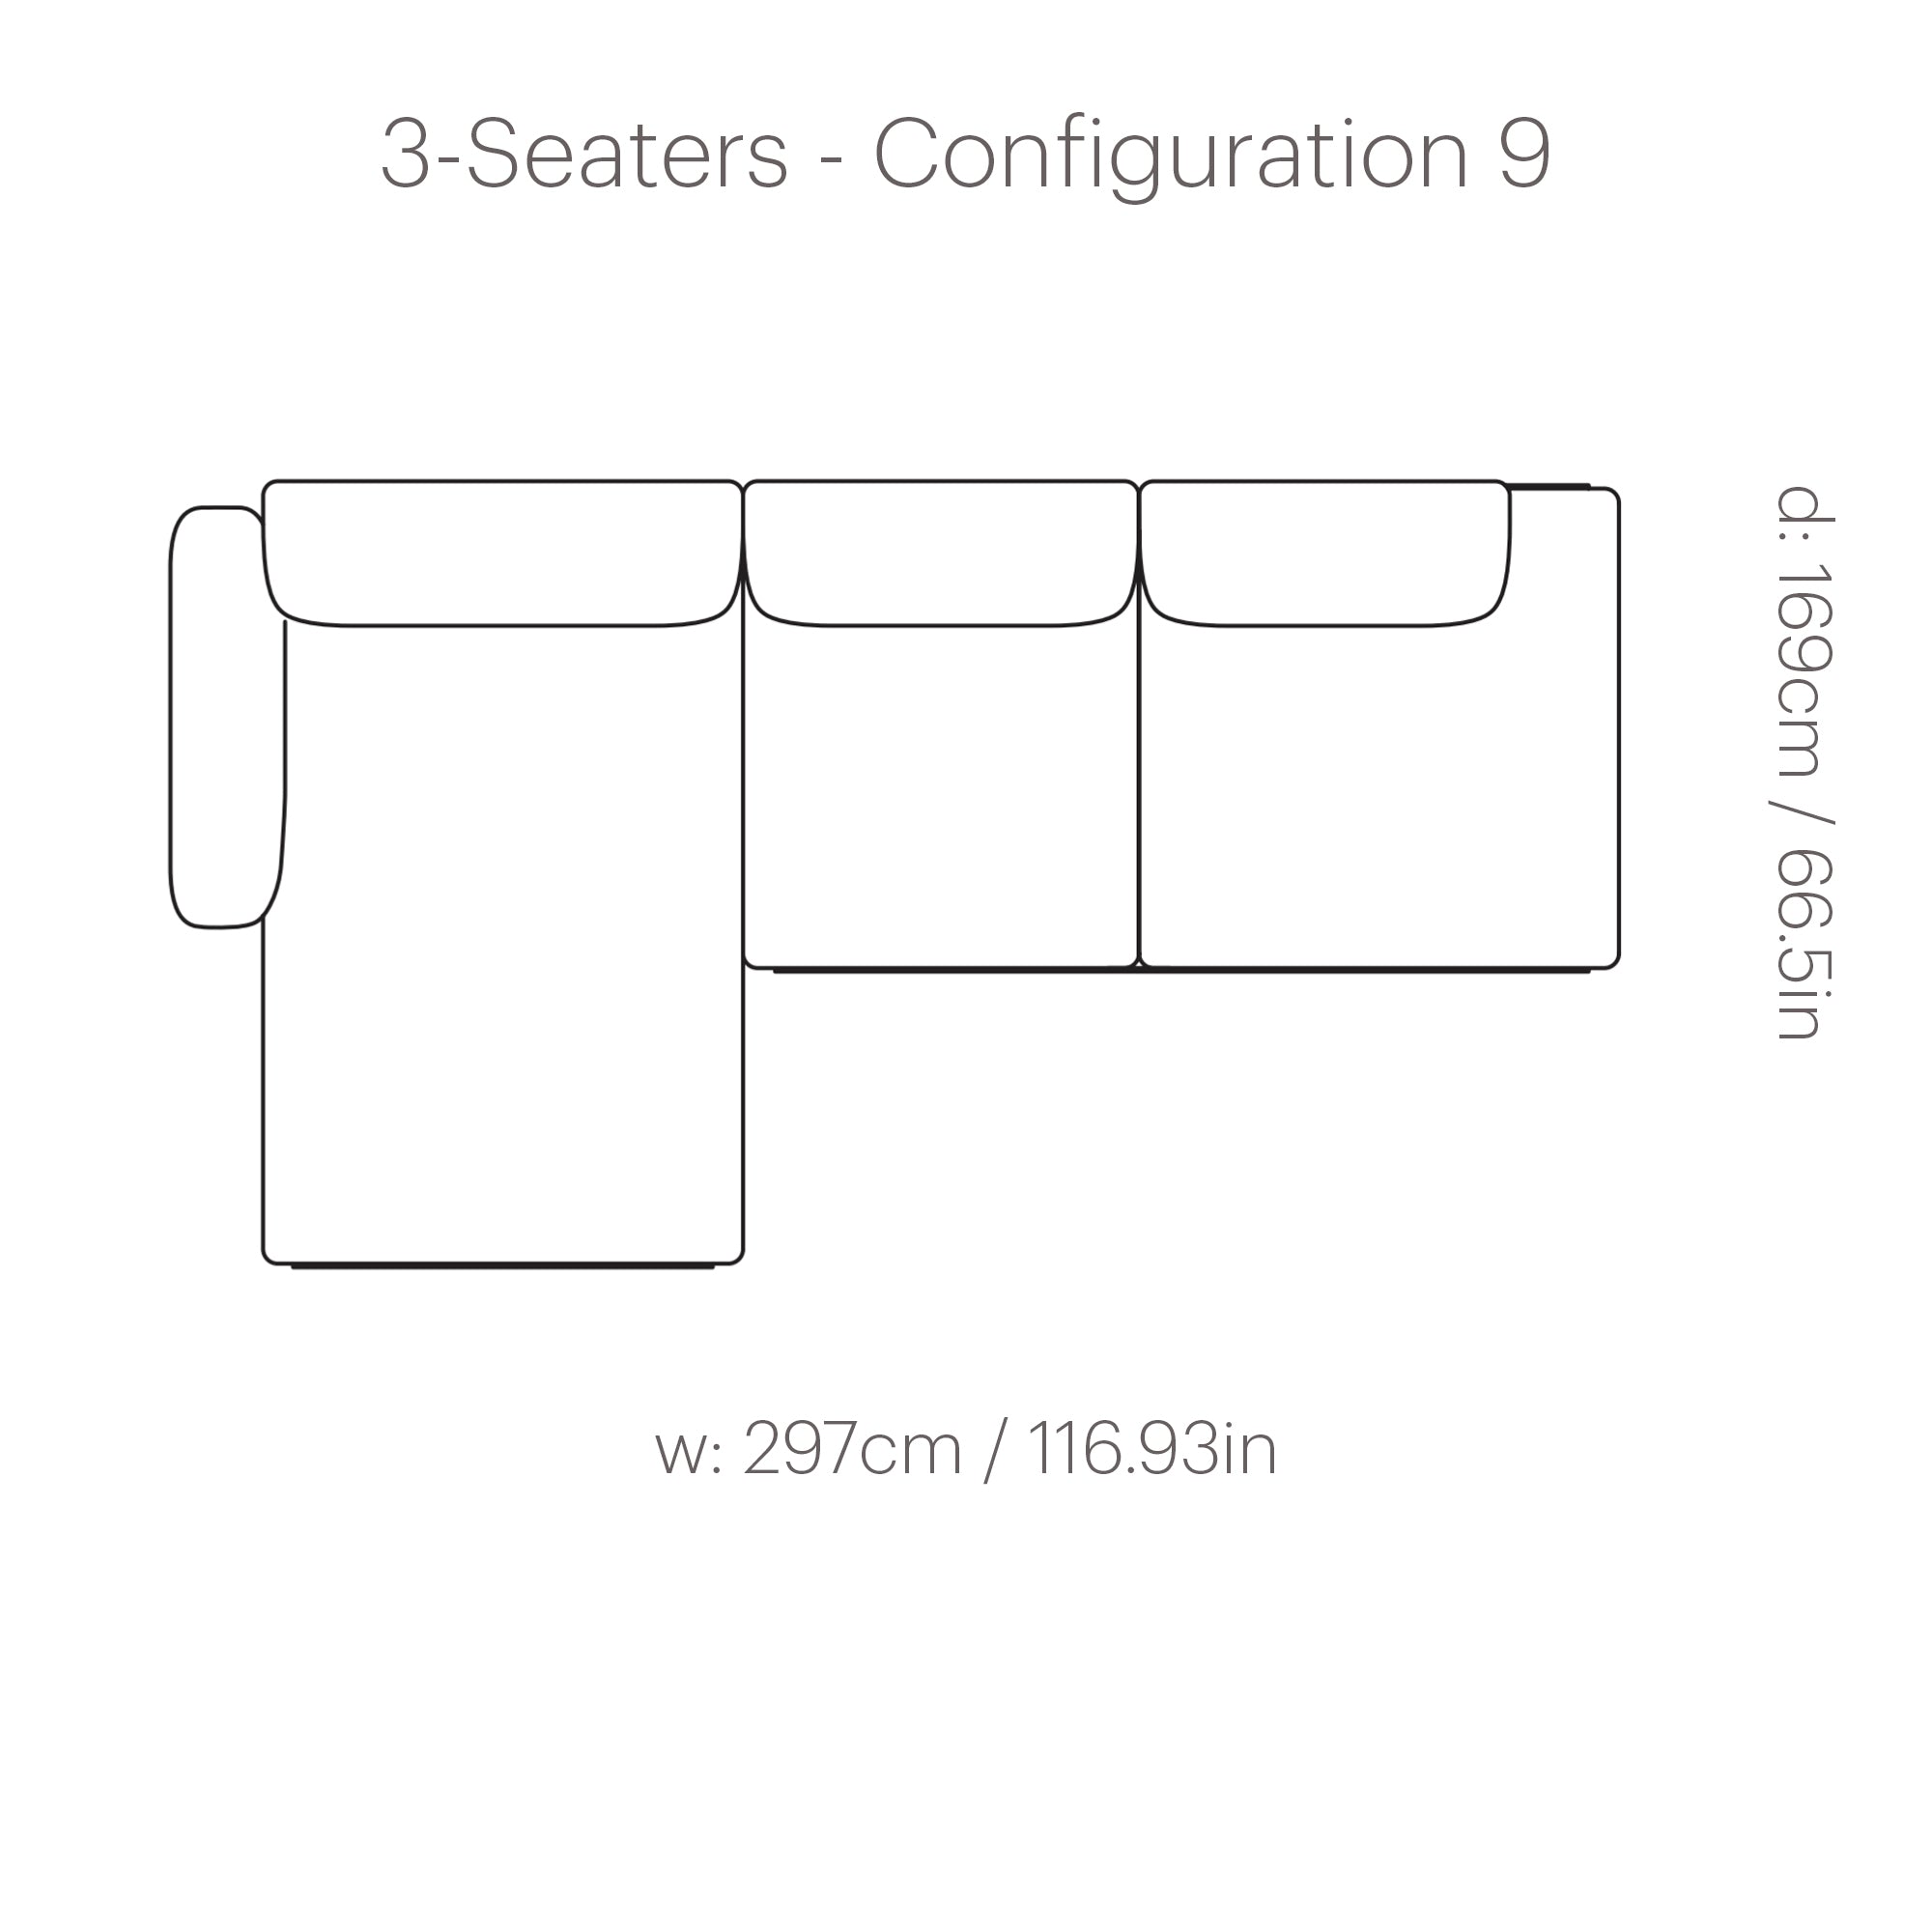 In Situ Modular Sofa: 3 Seater + Configuration 9